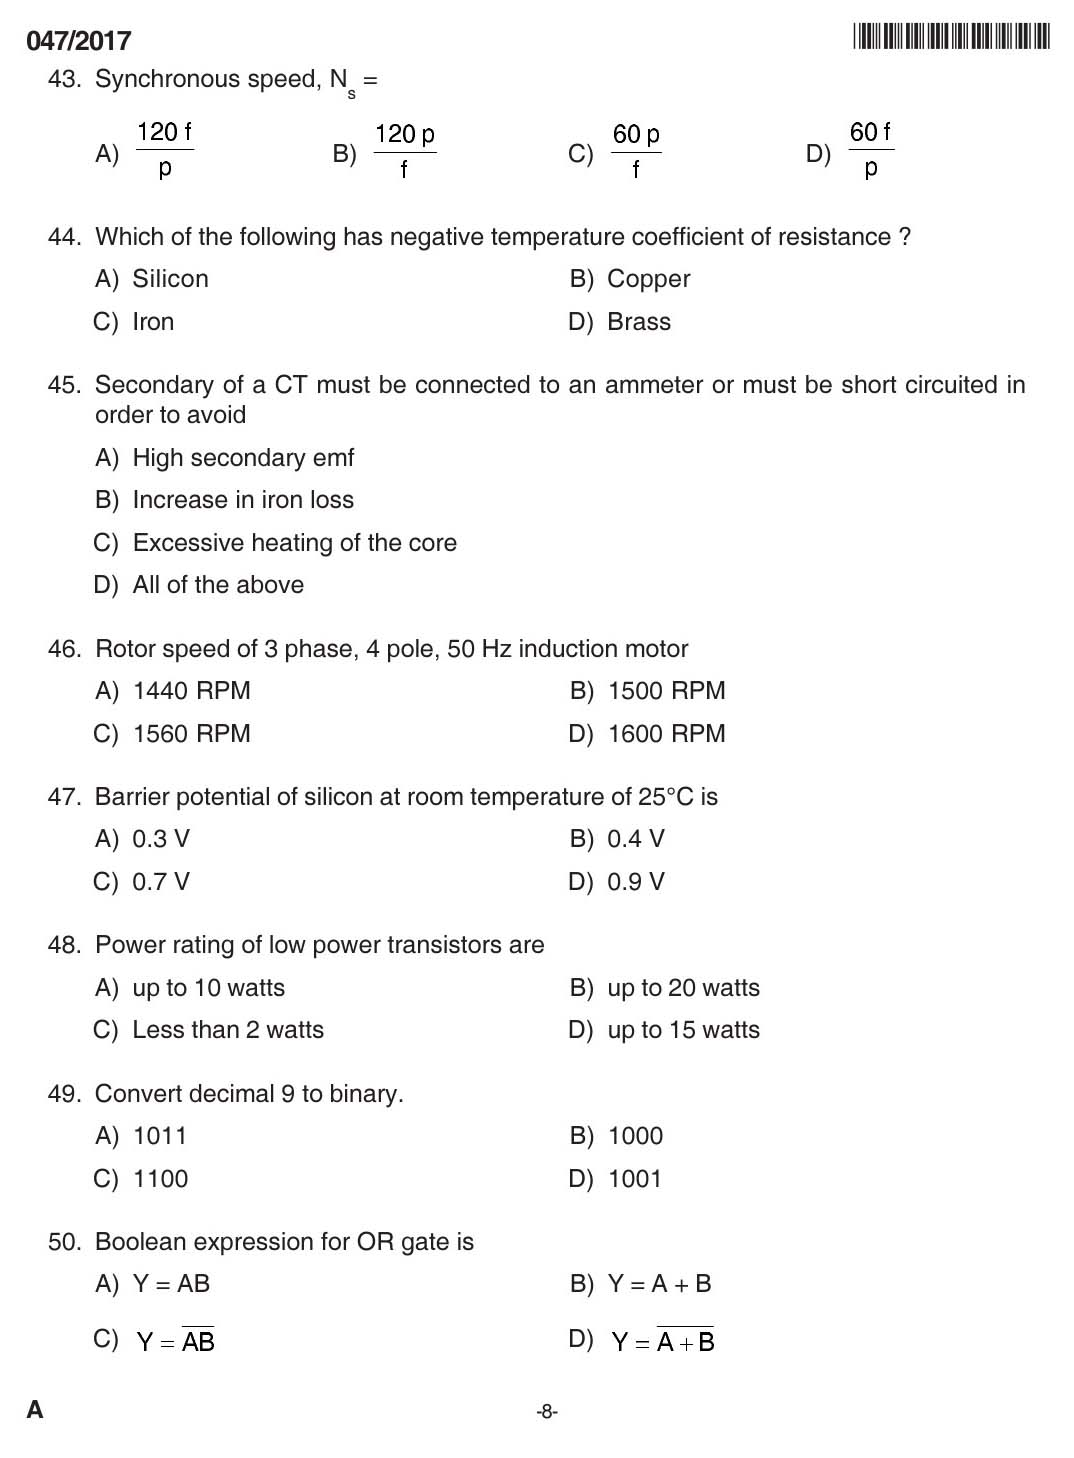 Kerala PSC Electrician Exam 2017 Question Paper Code 0472017 7